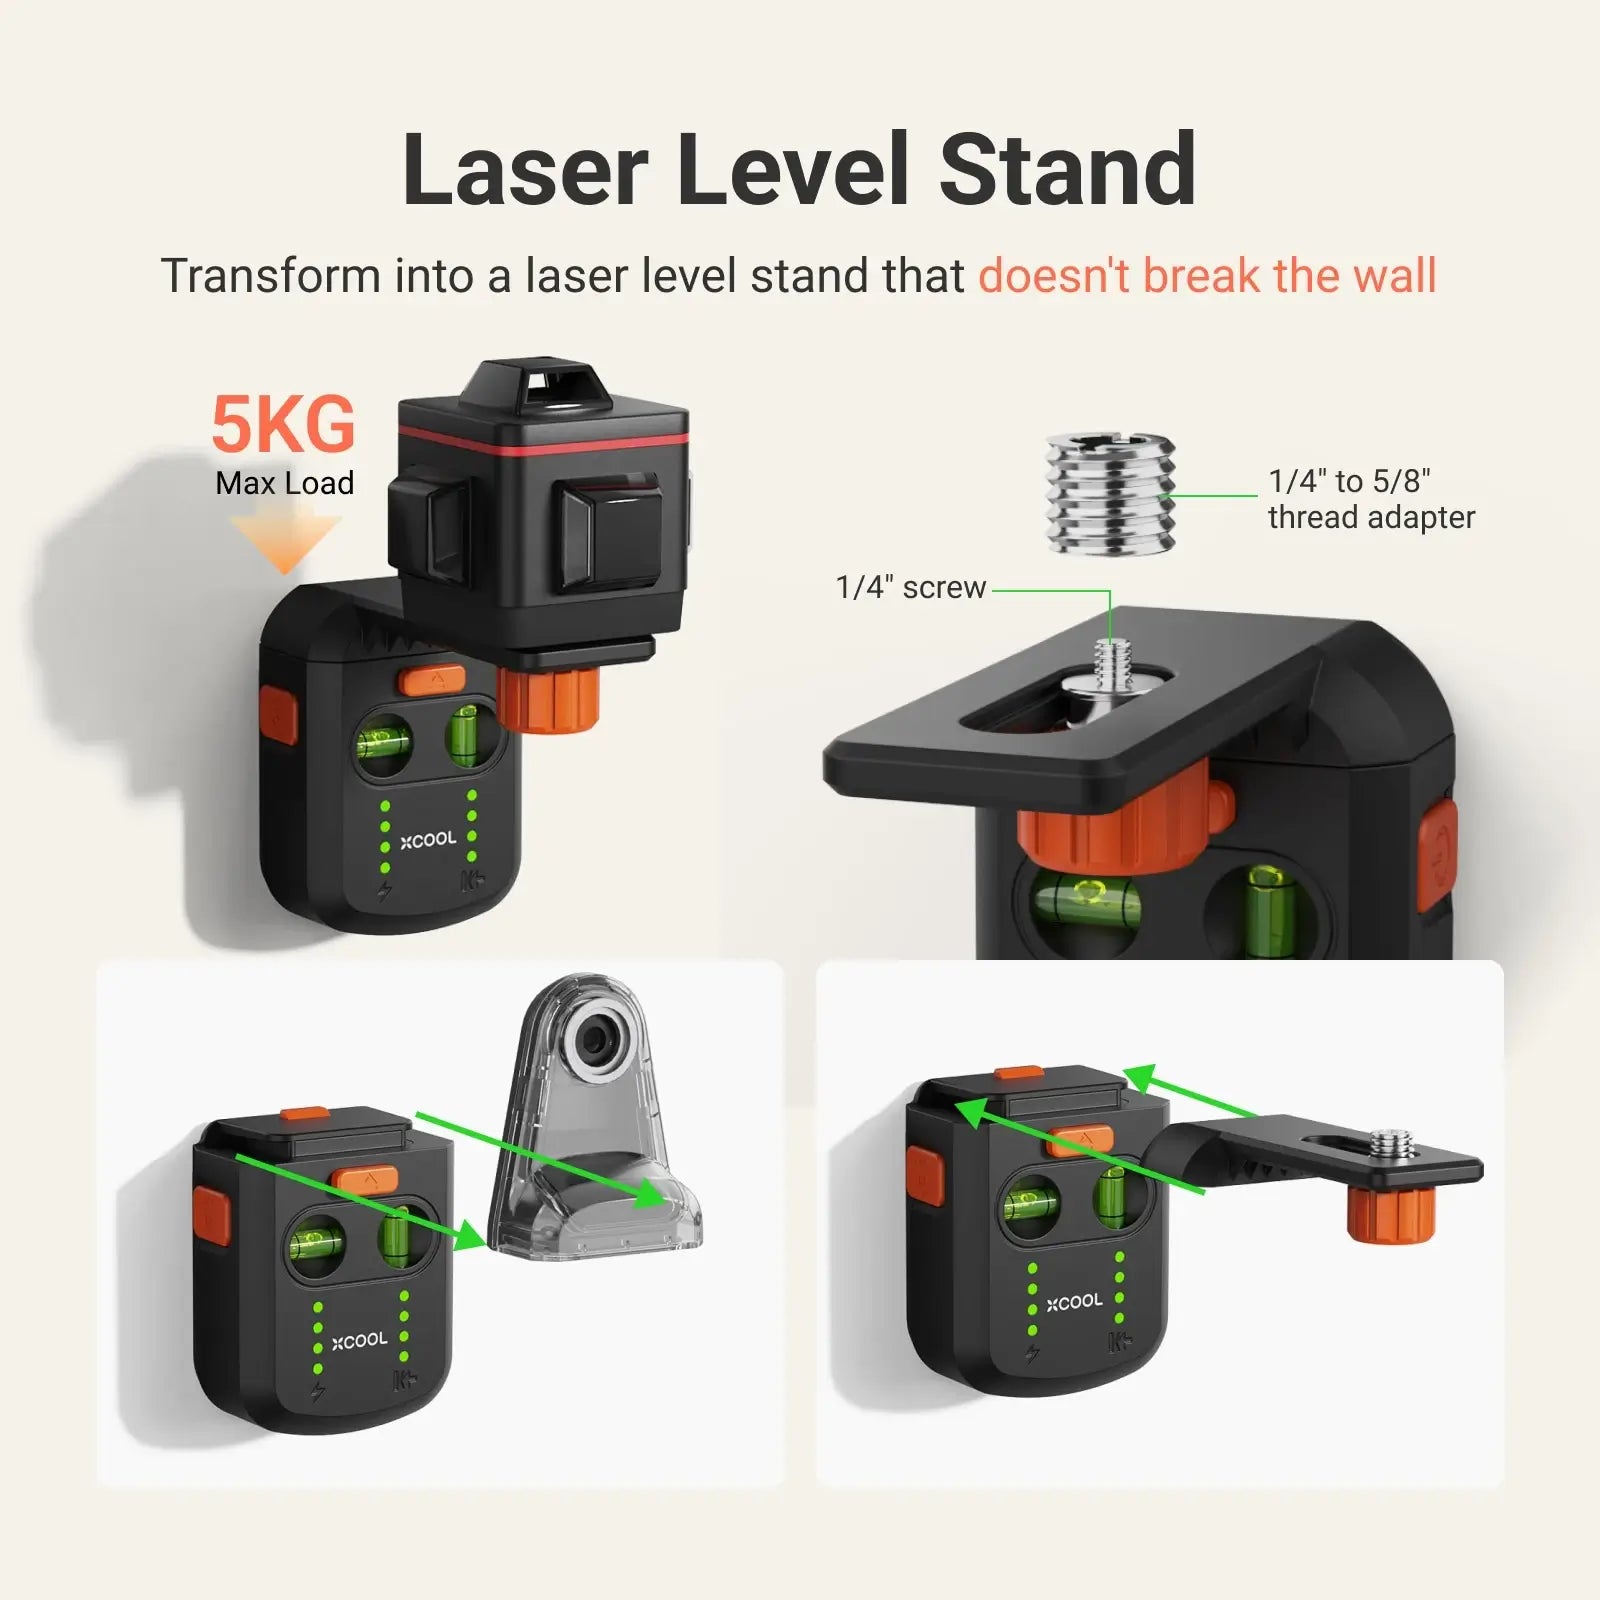 xCool Wallaser 3-in-1 Wall-Mountable Laser Level